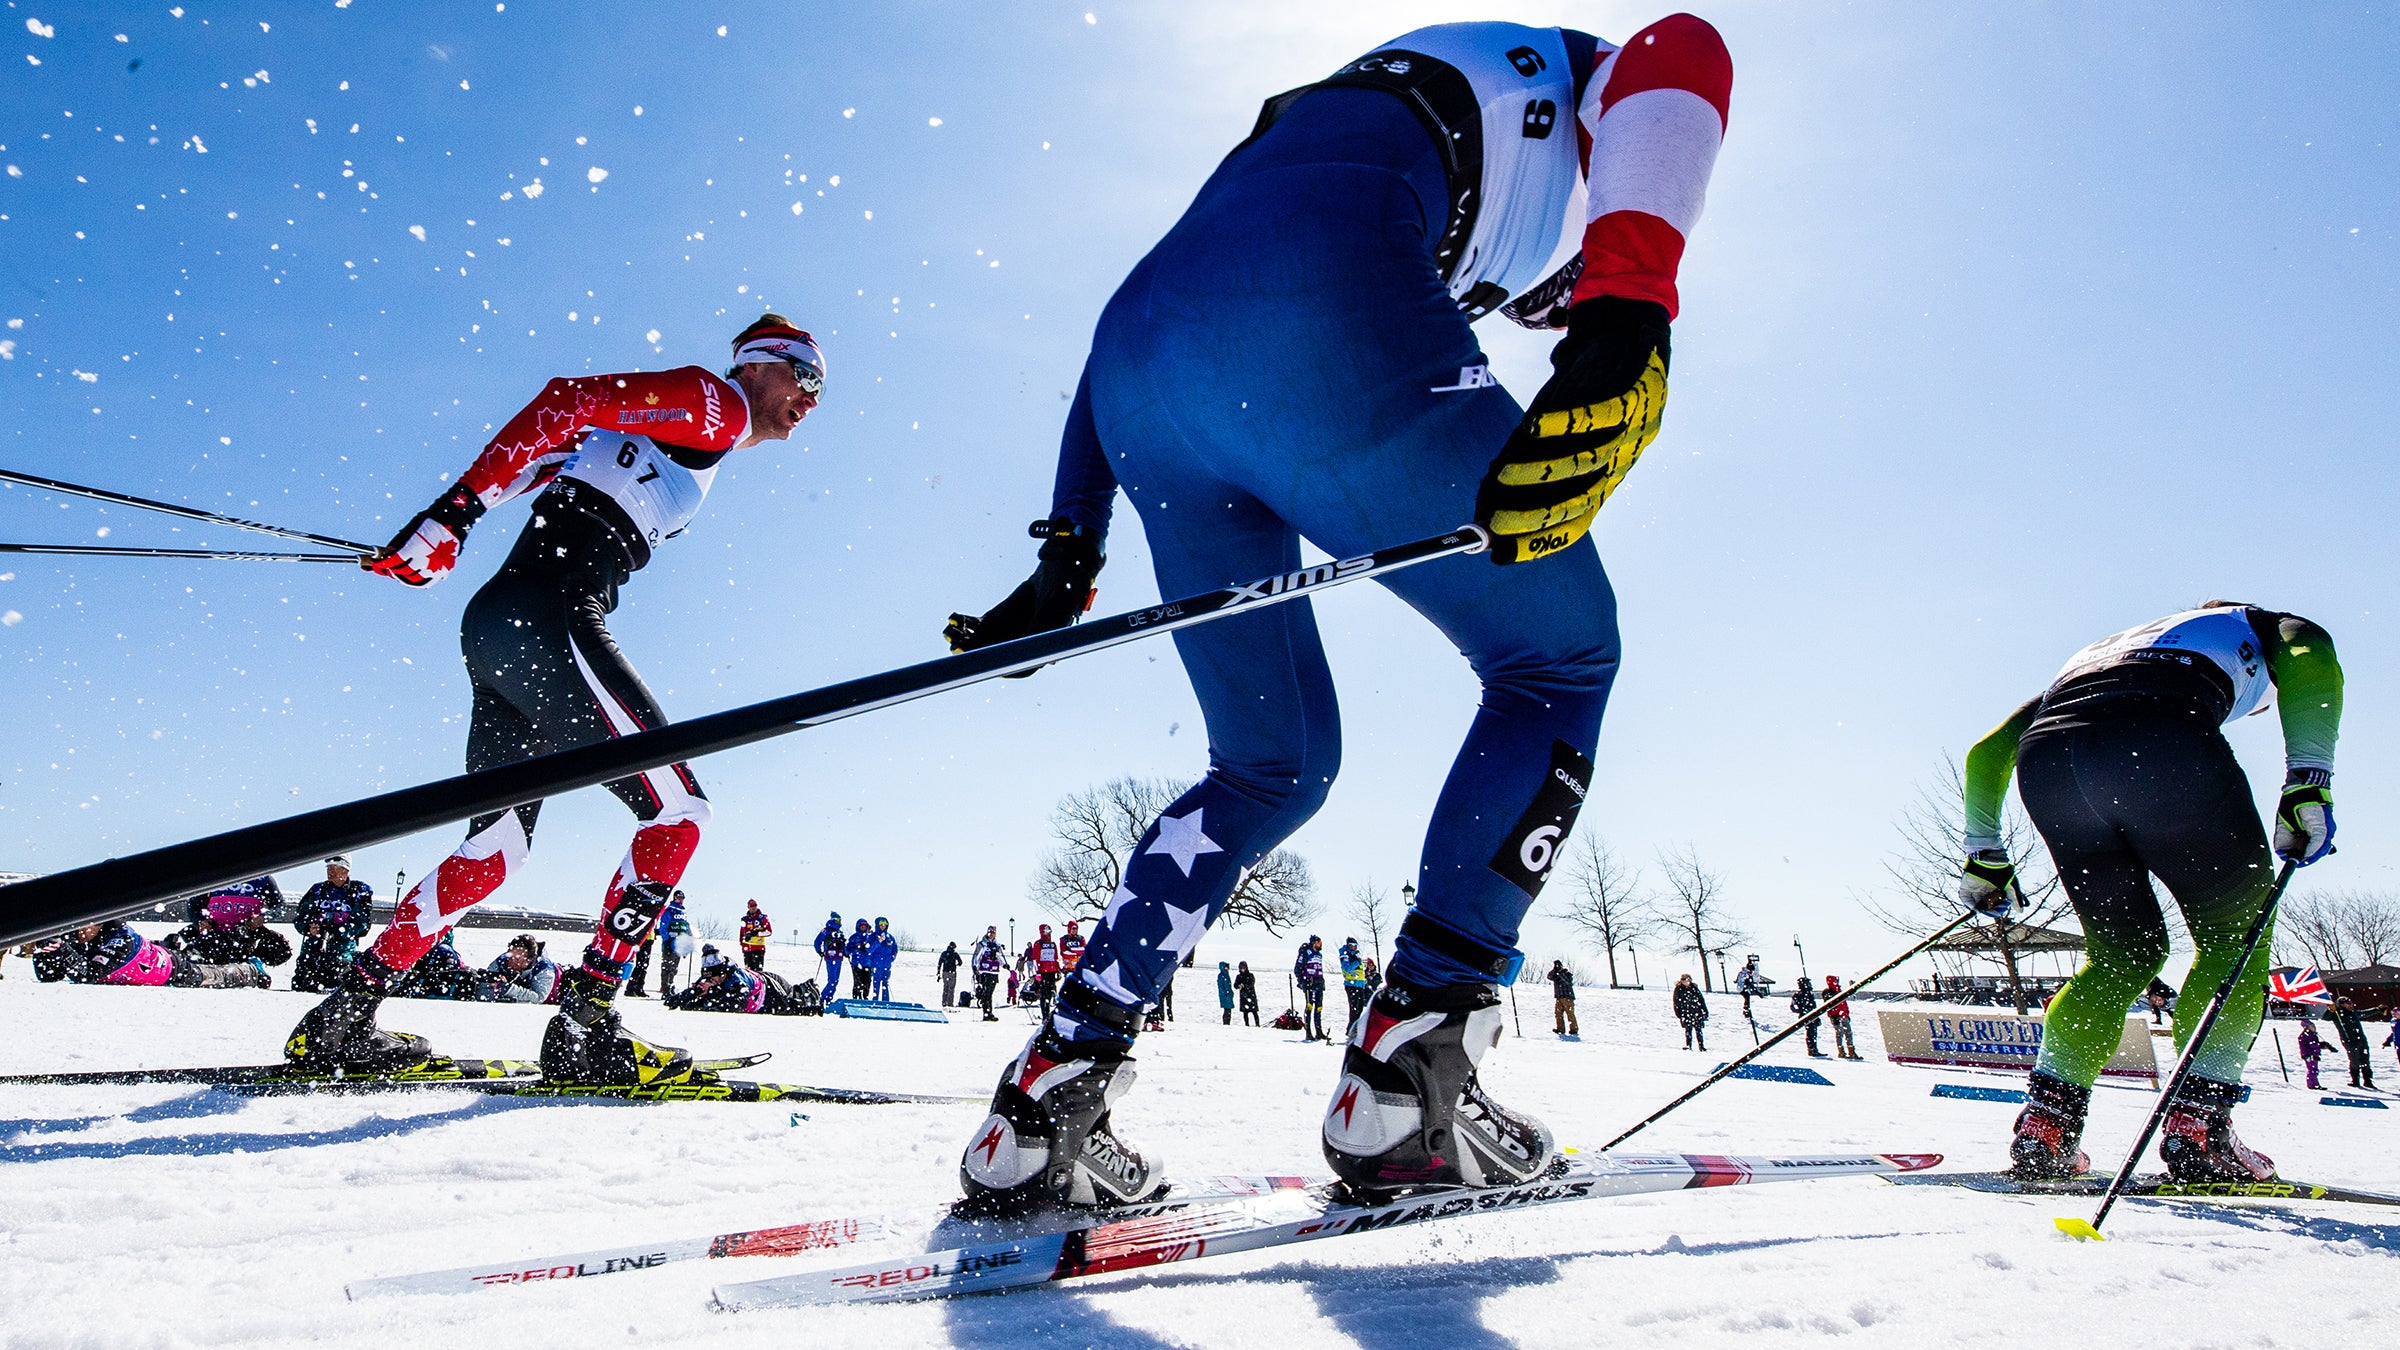 Nordic Skiing Has an Addiction to Toxic Wax